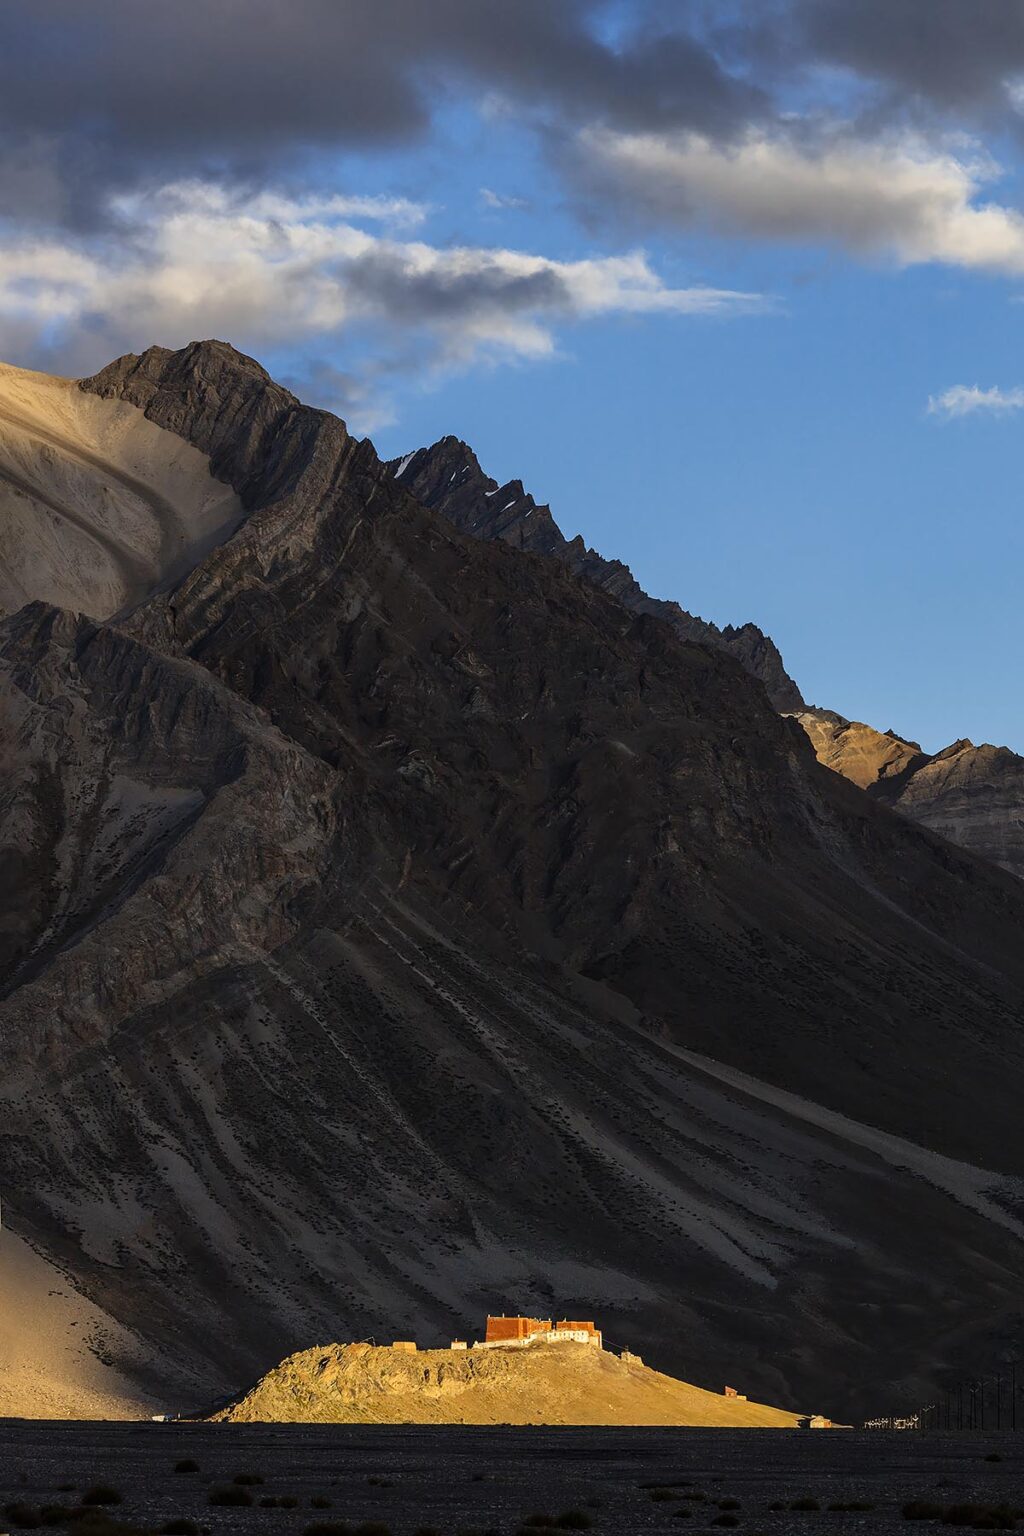 RANGDUM MONASTERY sits below Himalayan peaks in the Suru River Valley - ZANSKAR, LADAKH, INDIA